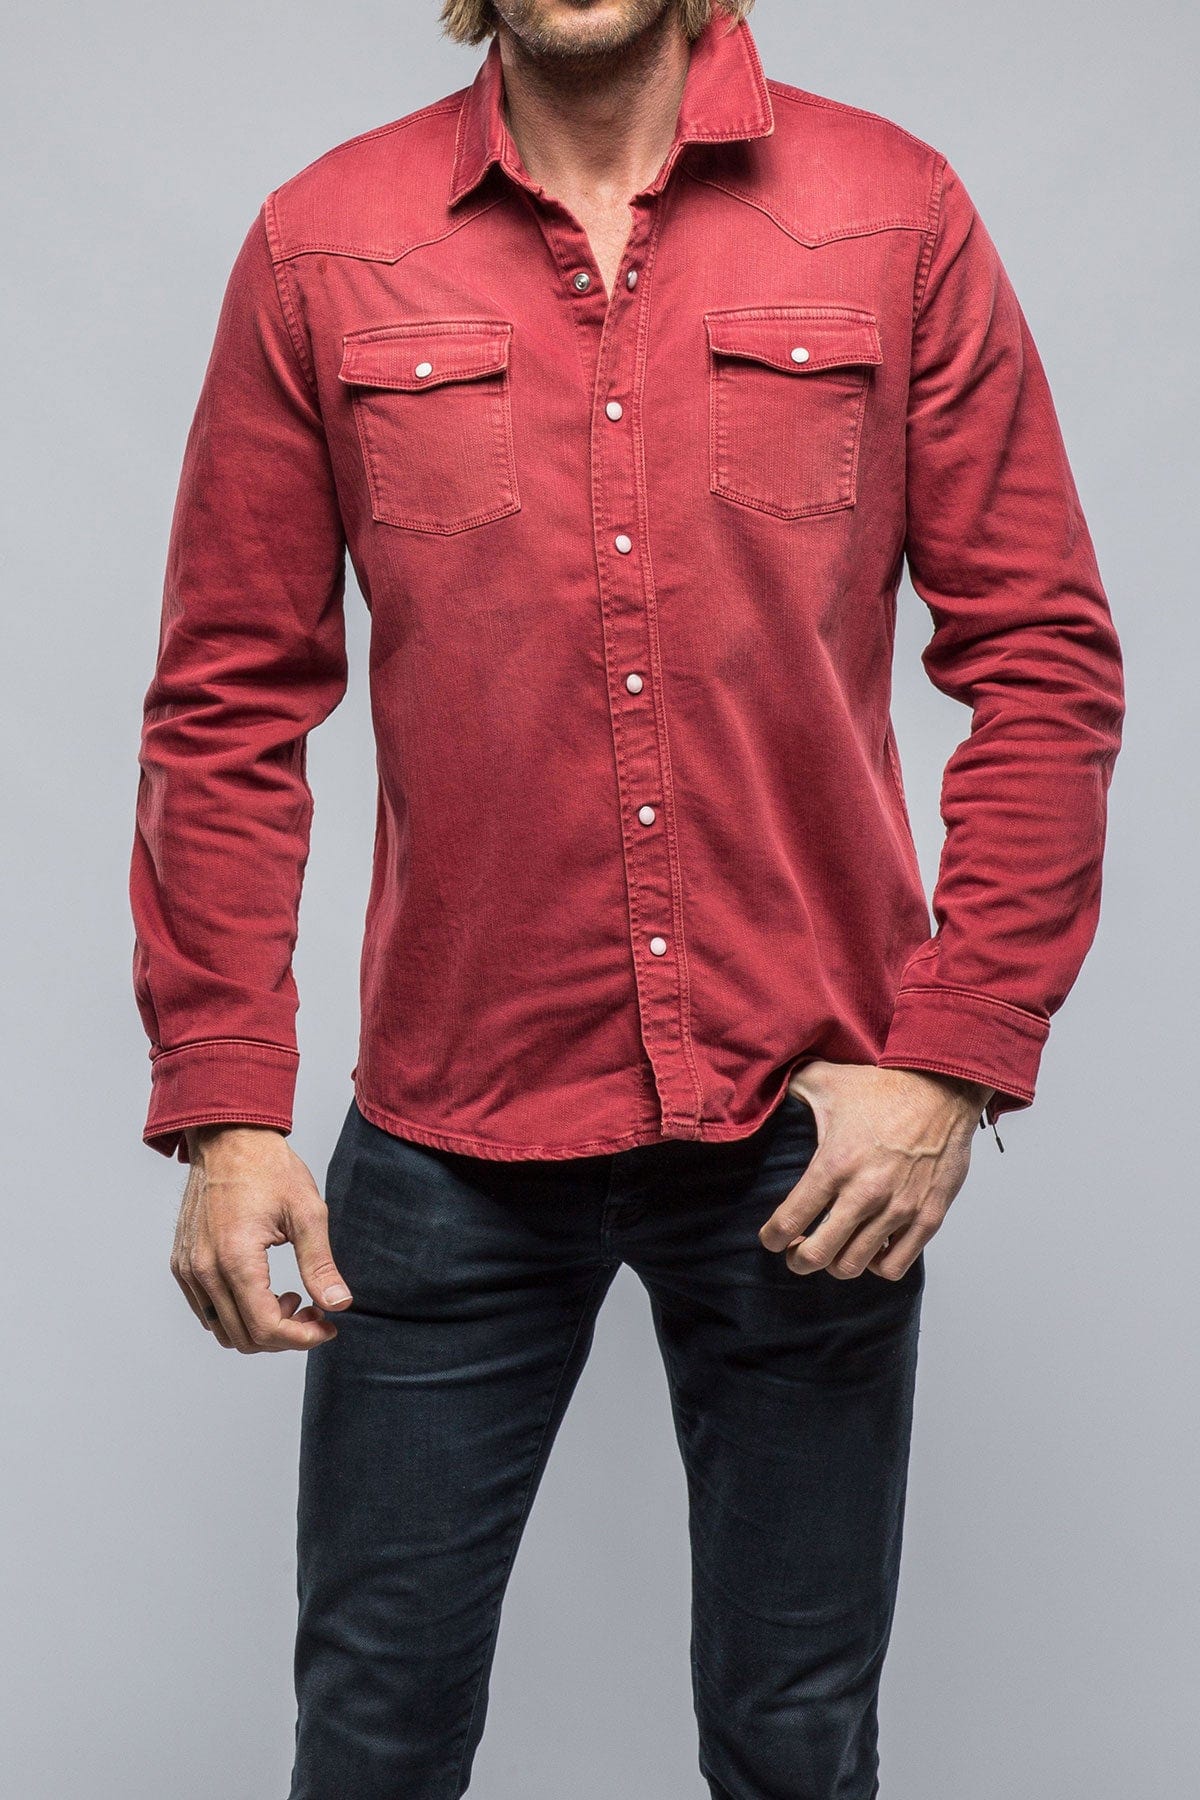 Ranger Colored Denim Snap Shirt In Cherry - AXEL'S